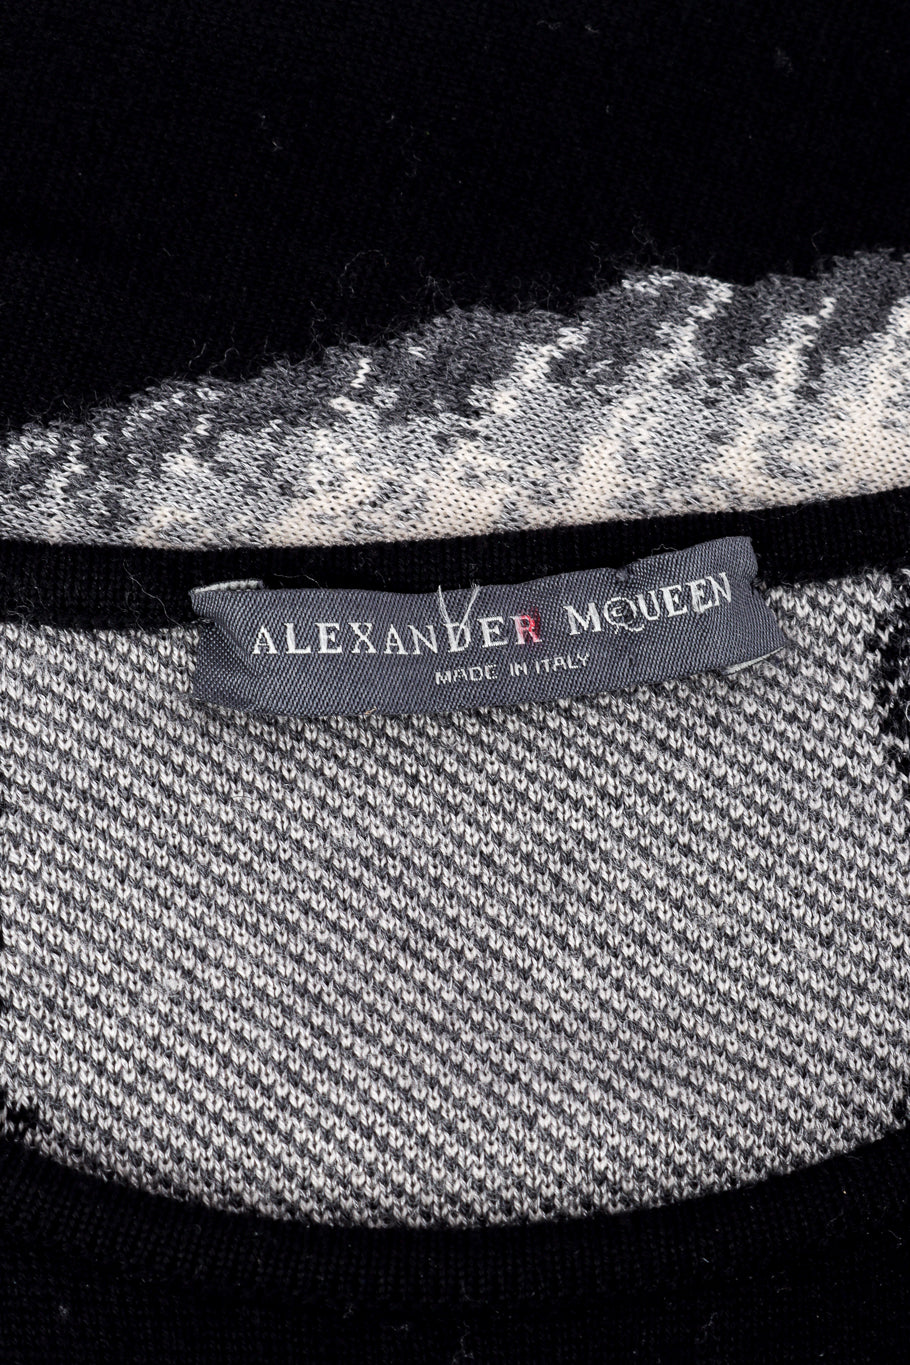 Alexander McQueen 2010 A/W Graphic Knit Dress signature label @recessla